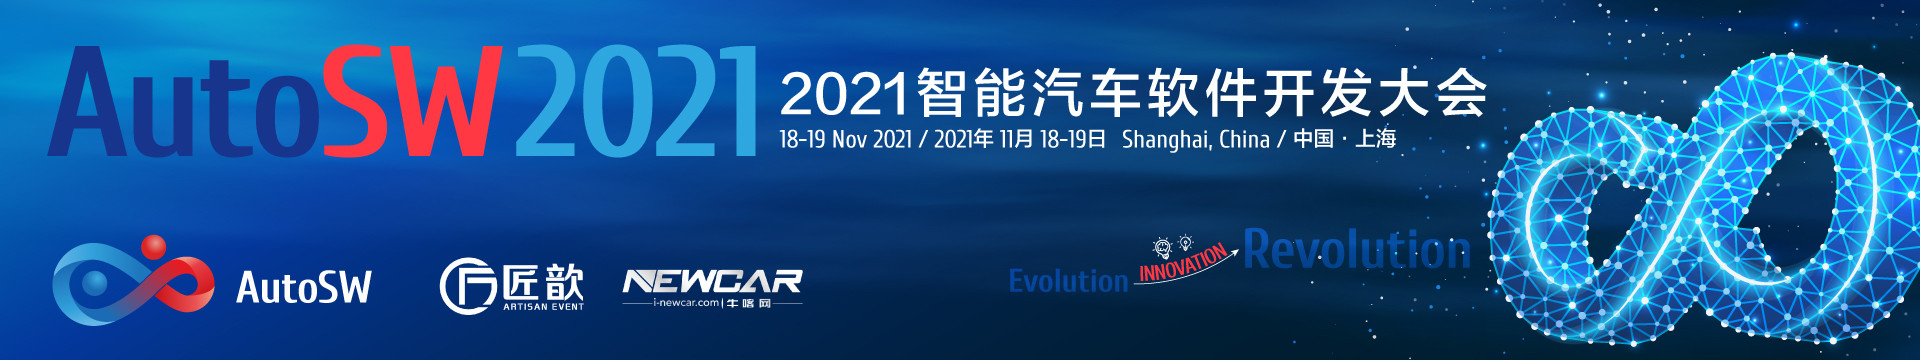 AutoSW 2021智能汽车软件开发大会